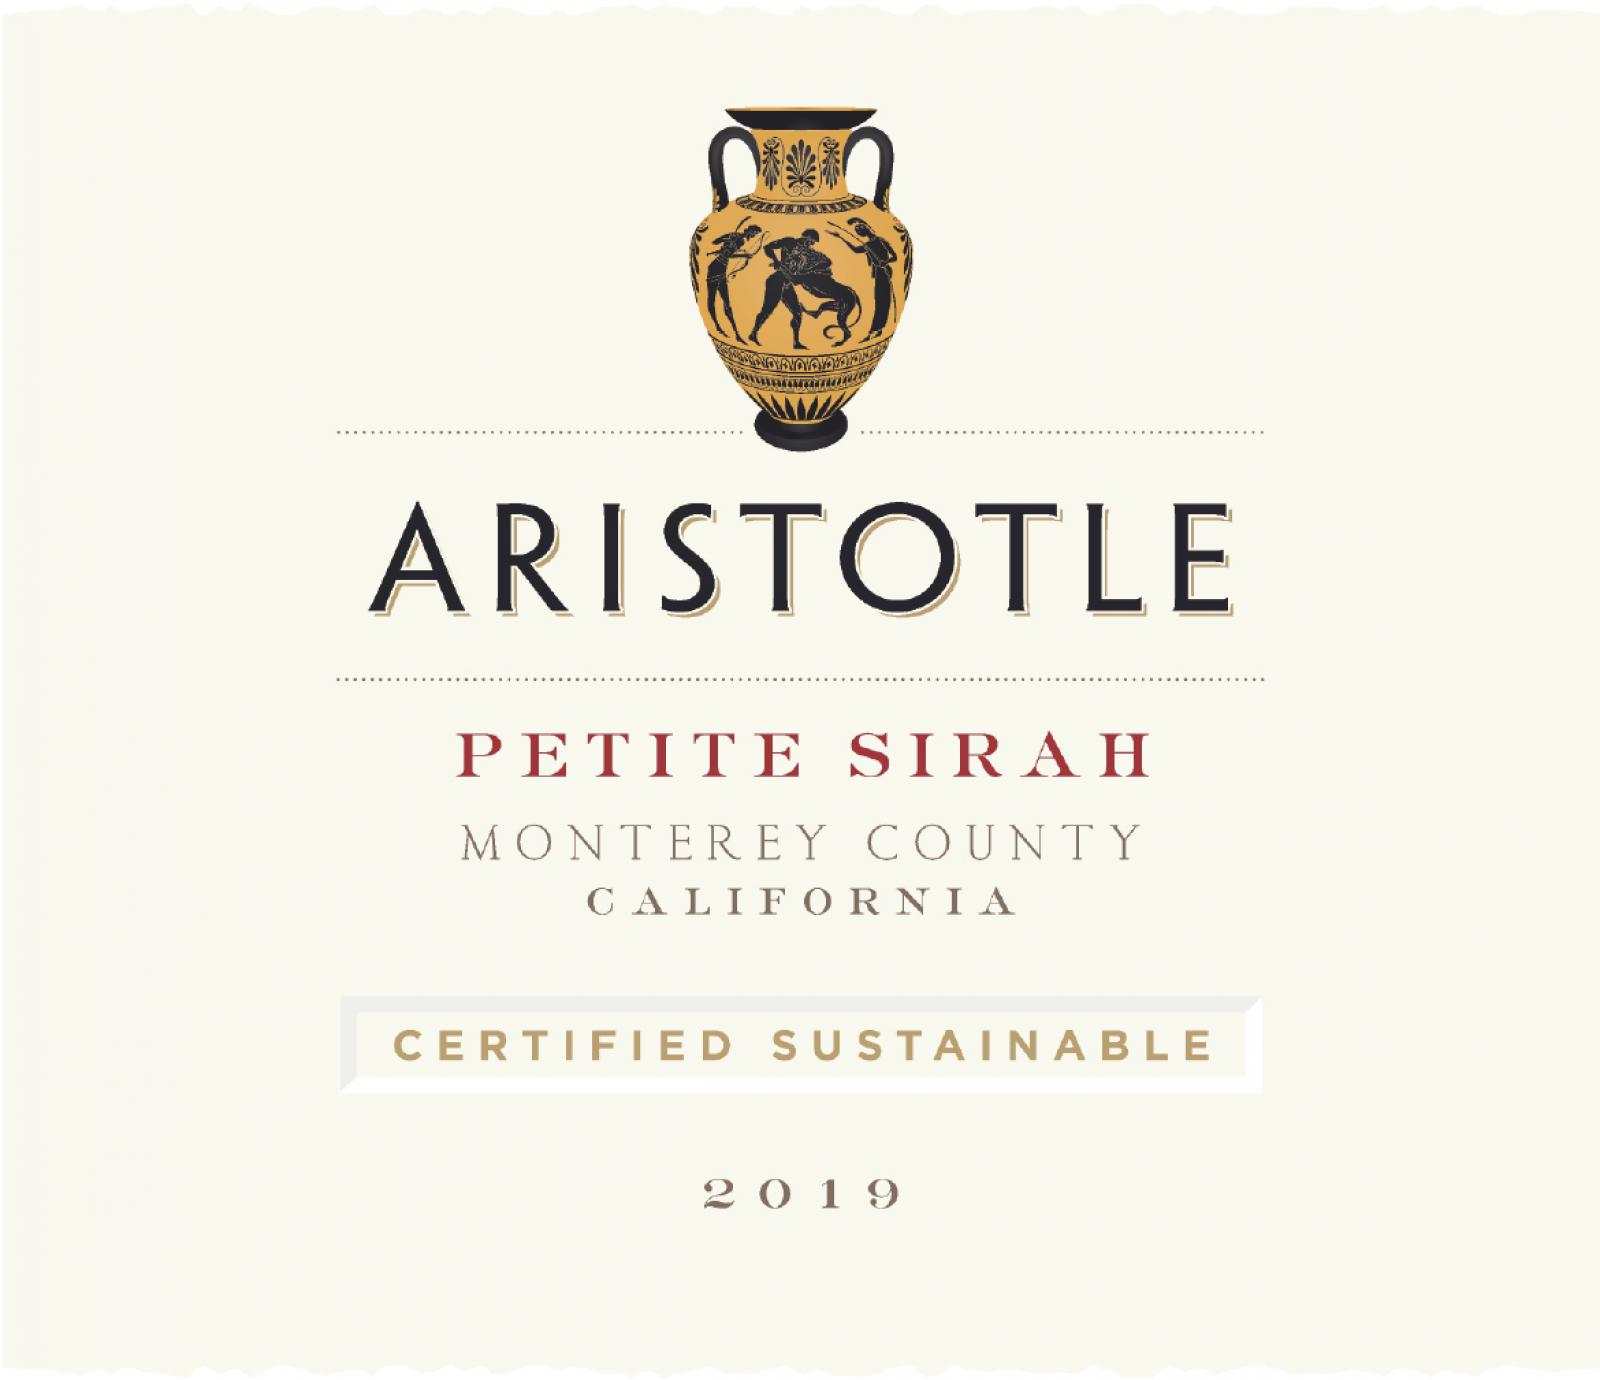 Aristotle Petite Sirah 2019